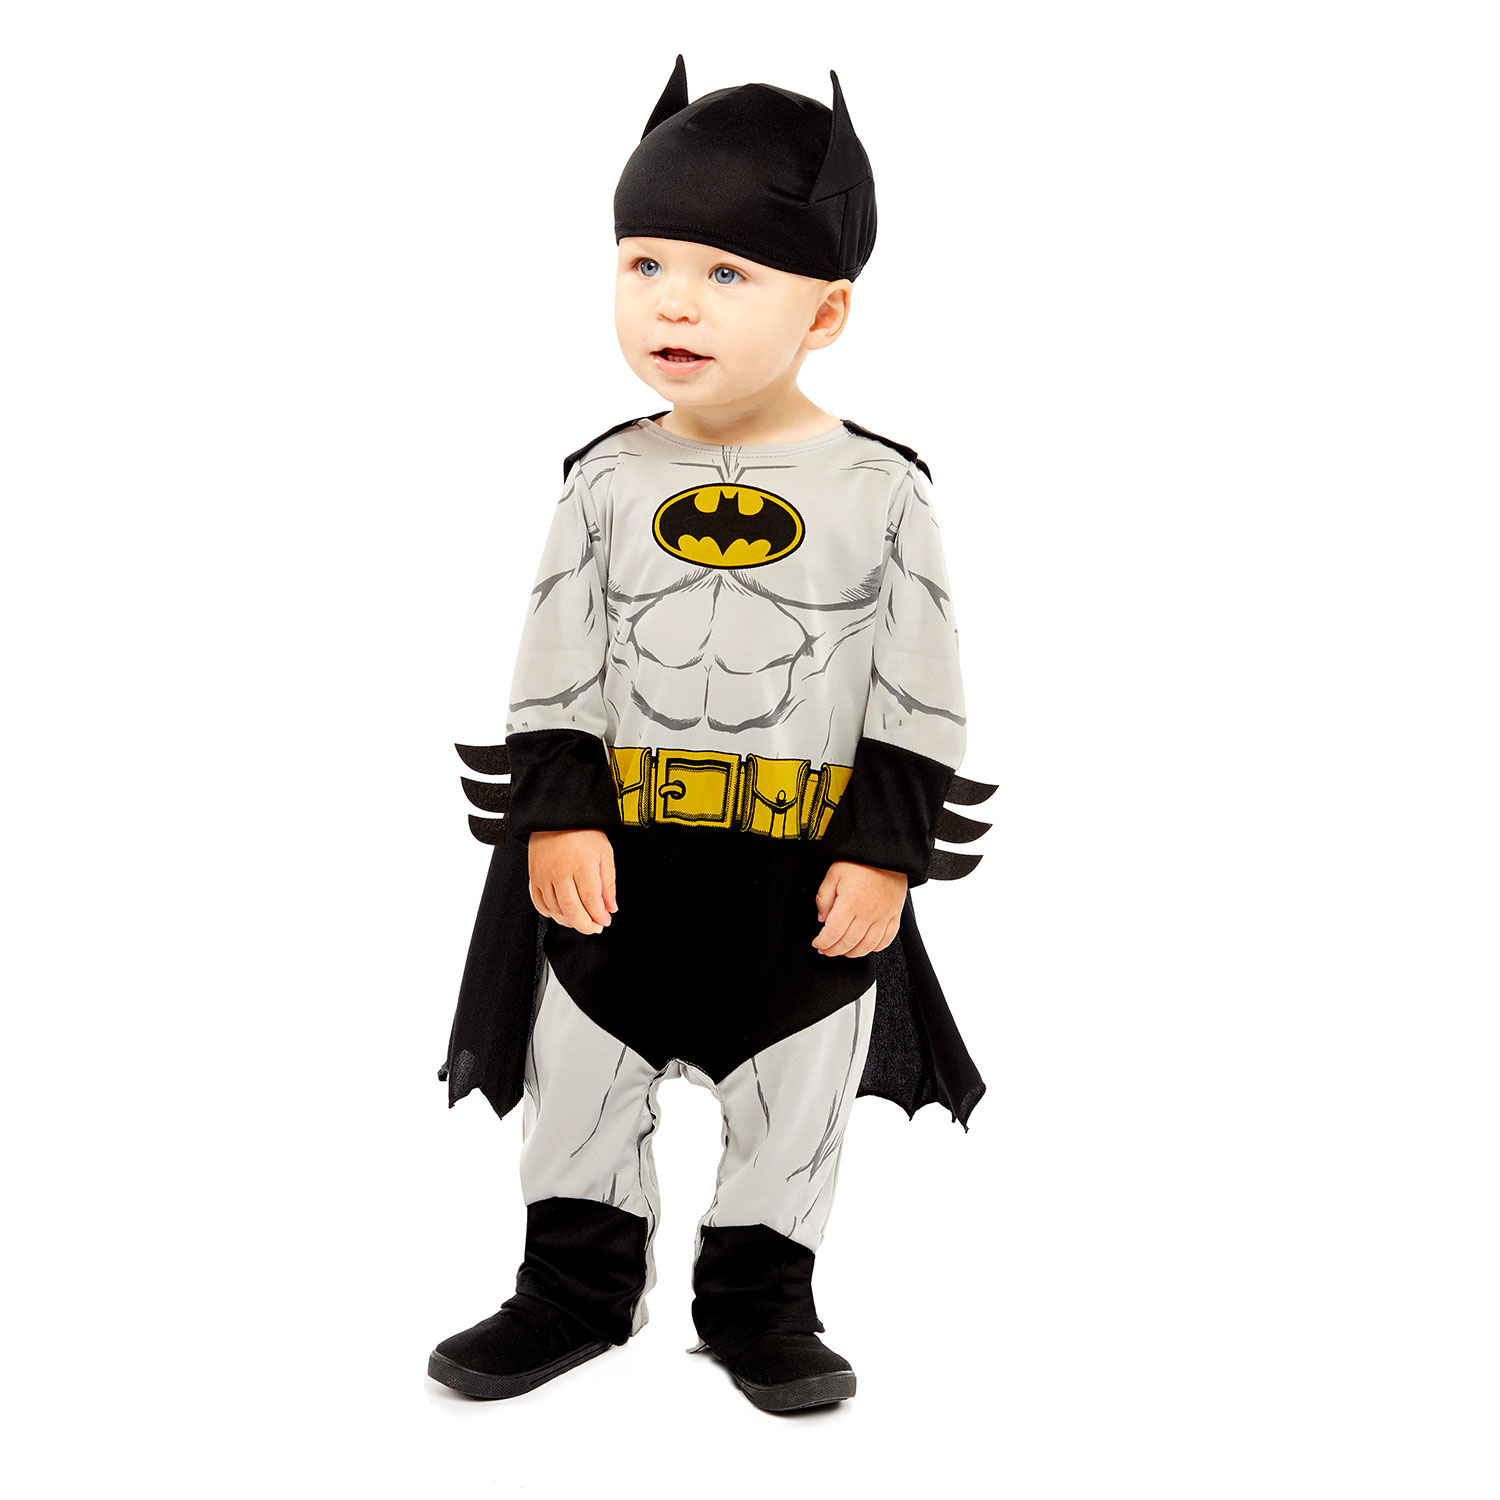 Batman Costume - Age 6-12 Months - 1 PC : Amscan International